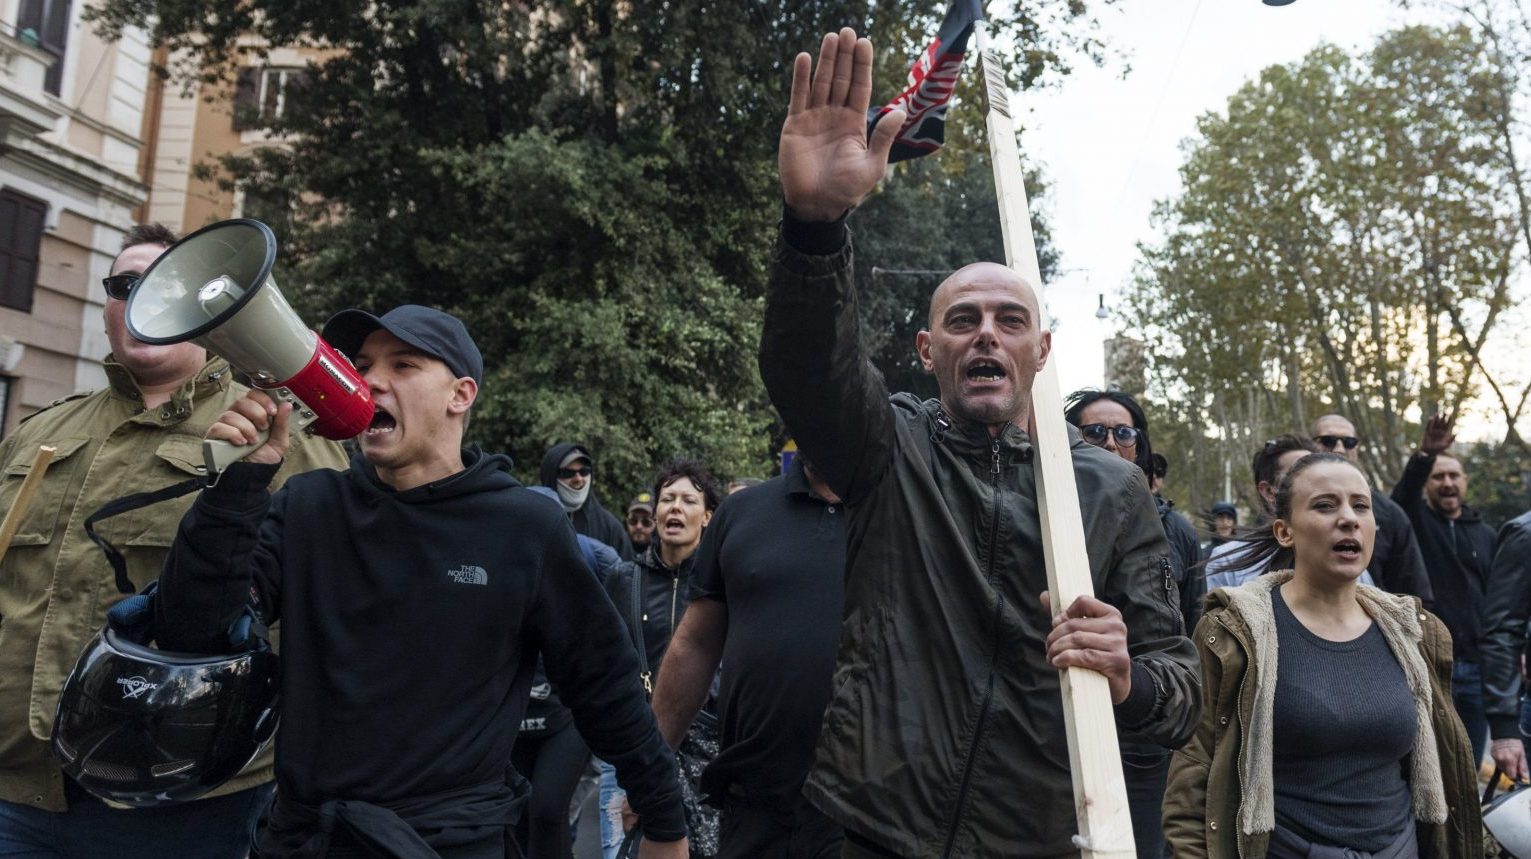 Forza Nuova (New Force) militants do the Nazi salute during an unauthorised march near Rome’s San Lorenzo neighbourhood, 2018 Photo: Michele Spatari/NurPhoto via Getty Images